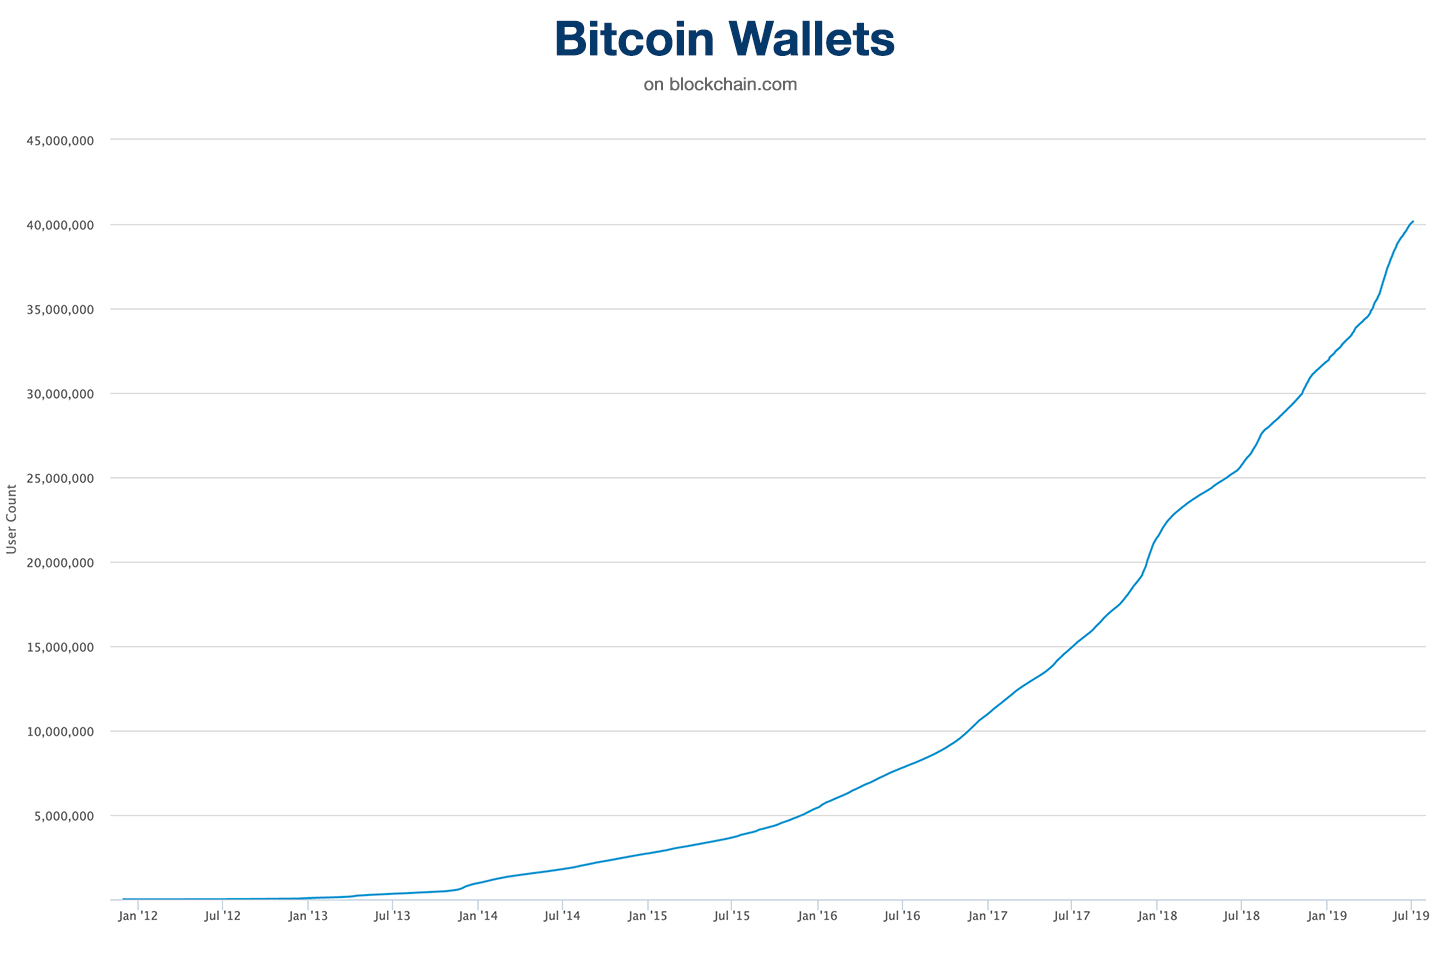 Bitcoin Wallets on Blockchain.com